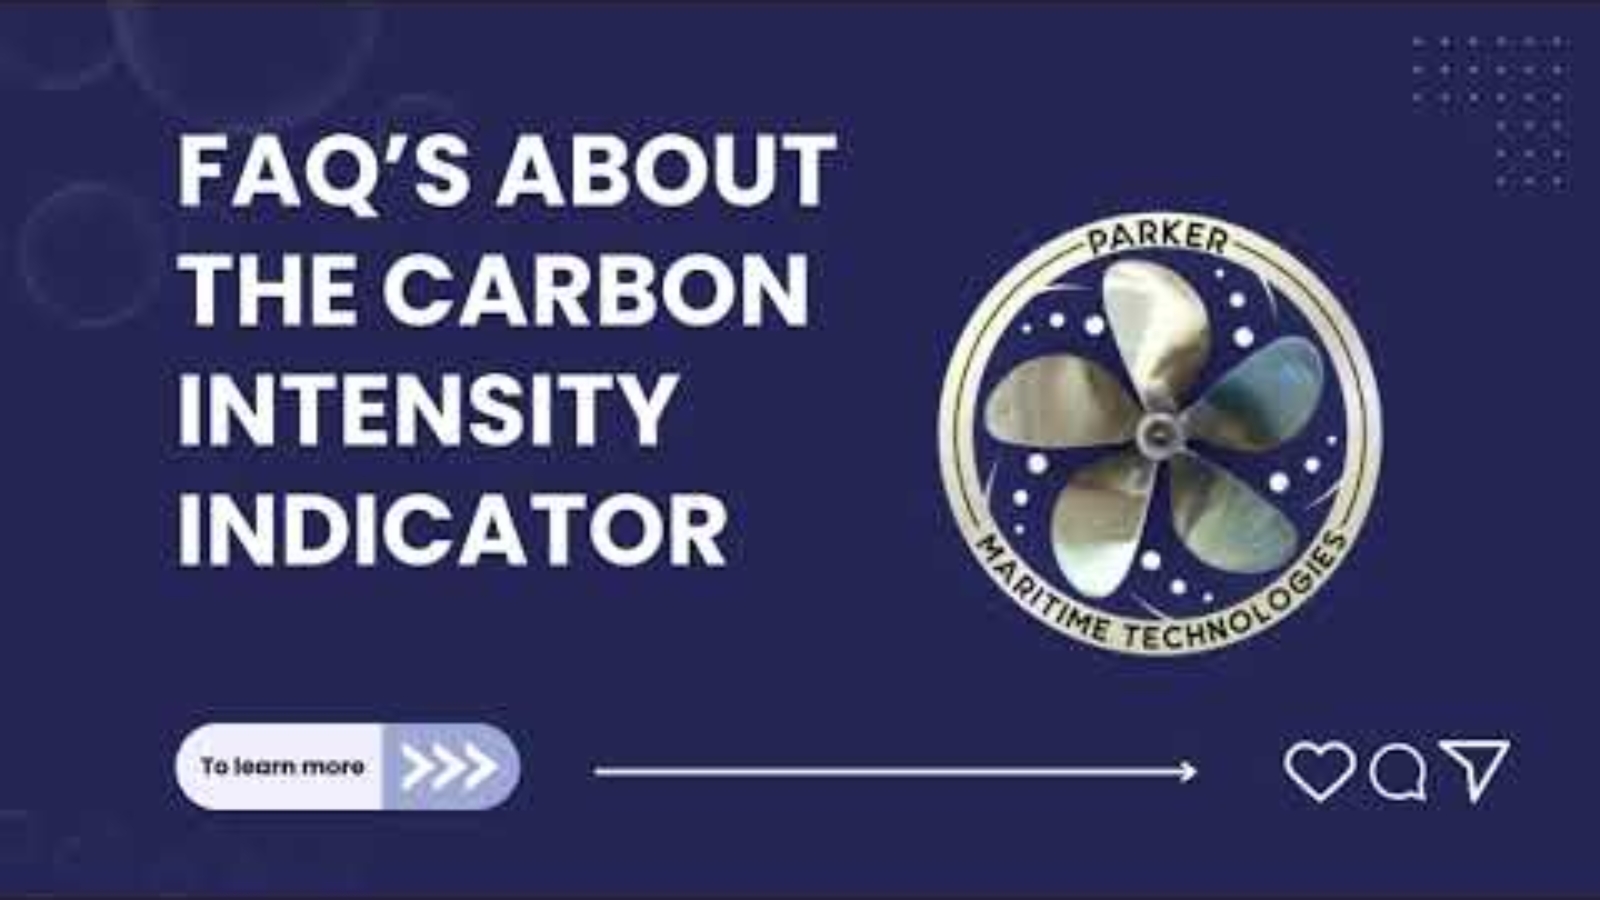 IMO Carbon Intensity Indicator (CII) FAQ's